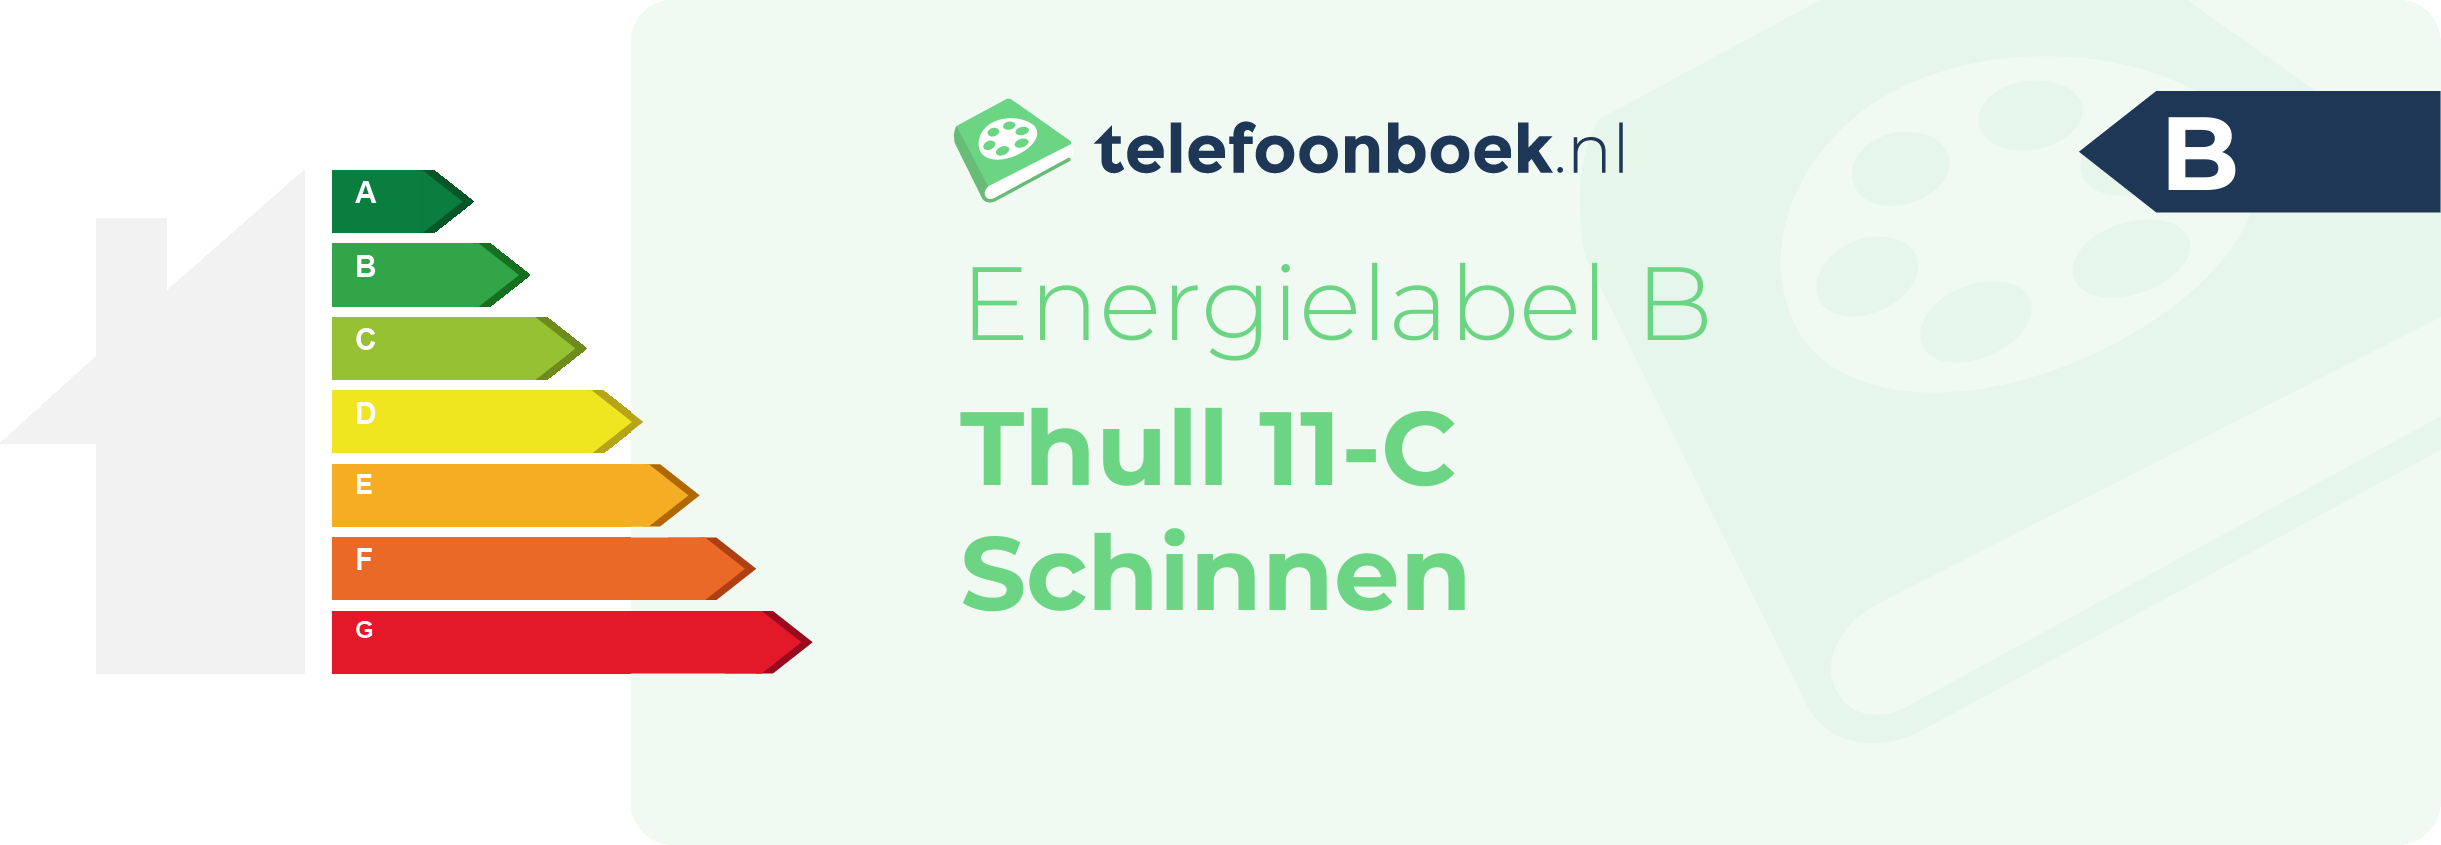 Energielabel Thull 11-C Schinnen